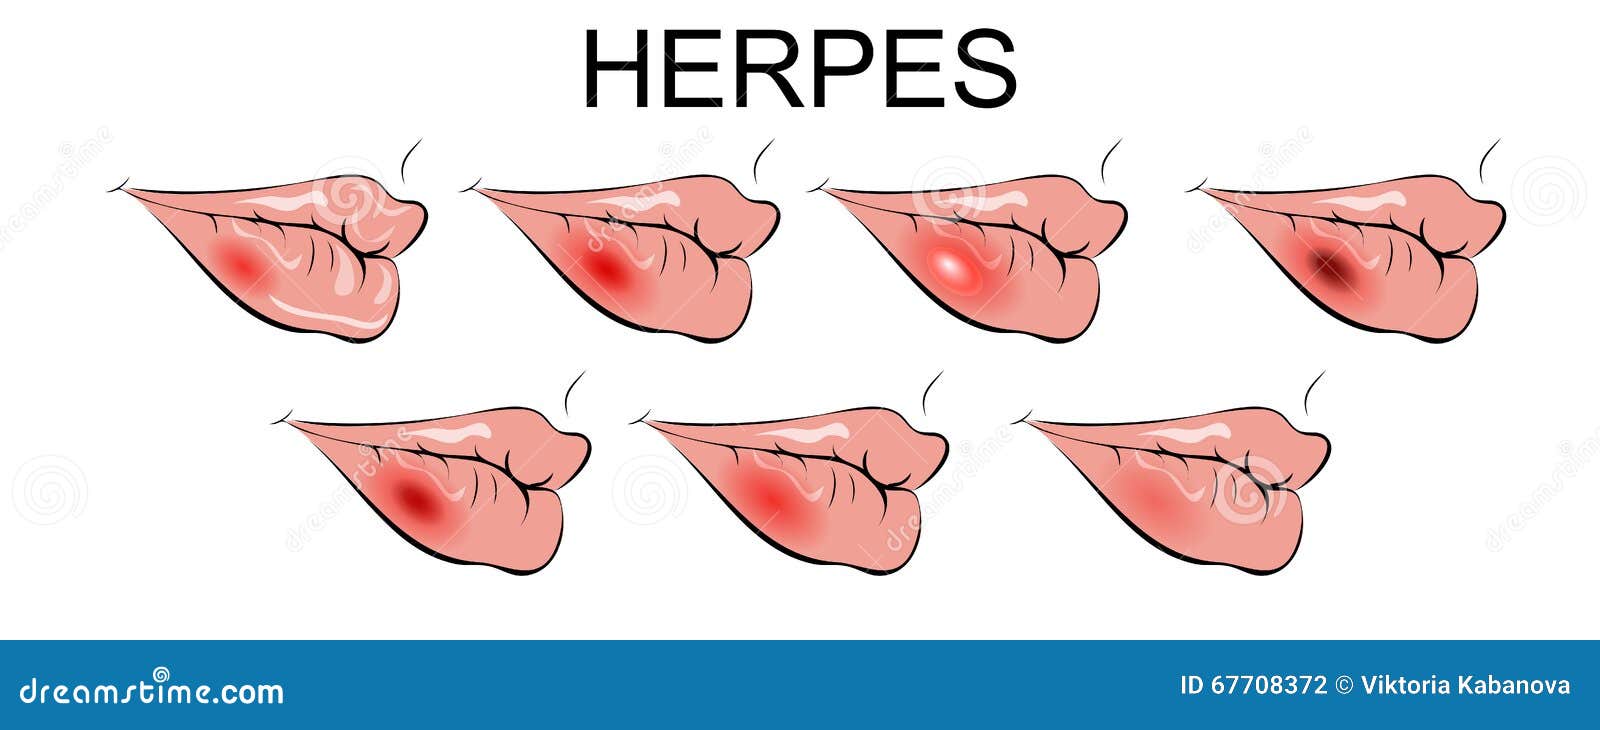 Herpes labialis - Wikipedia